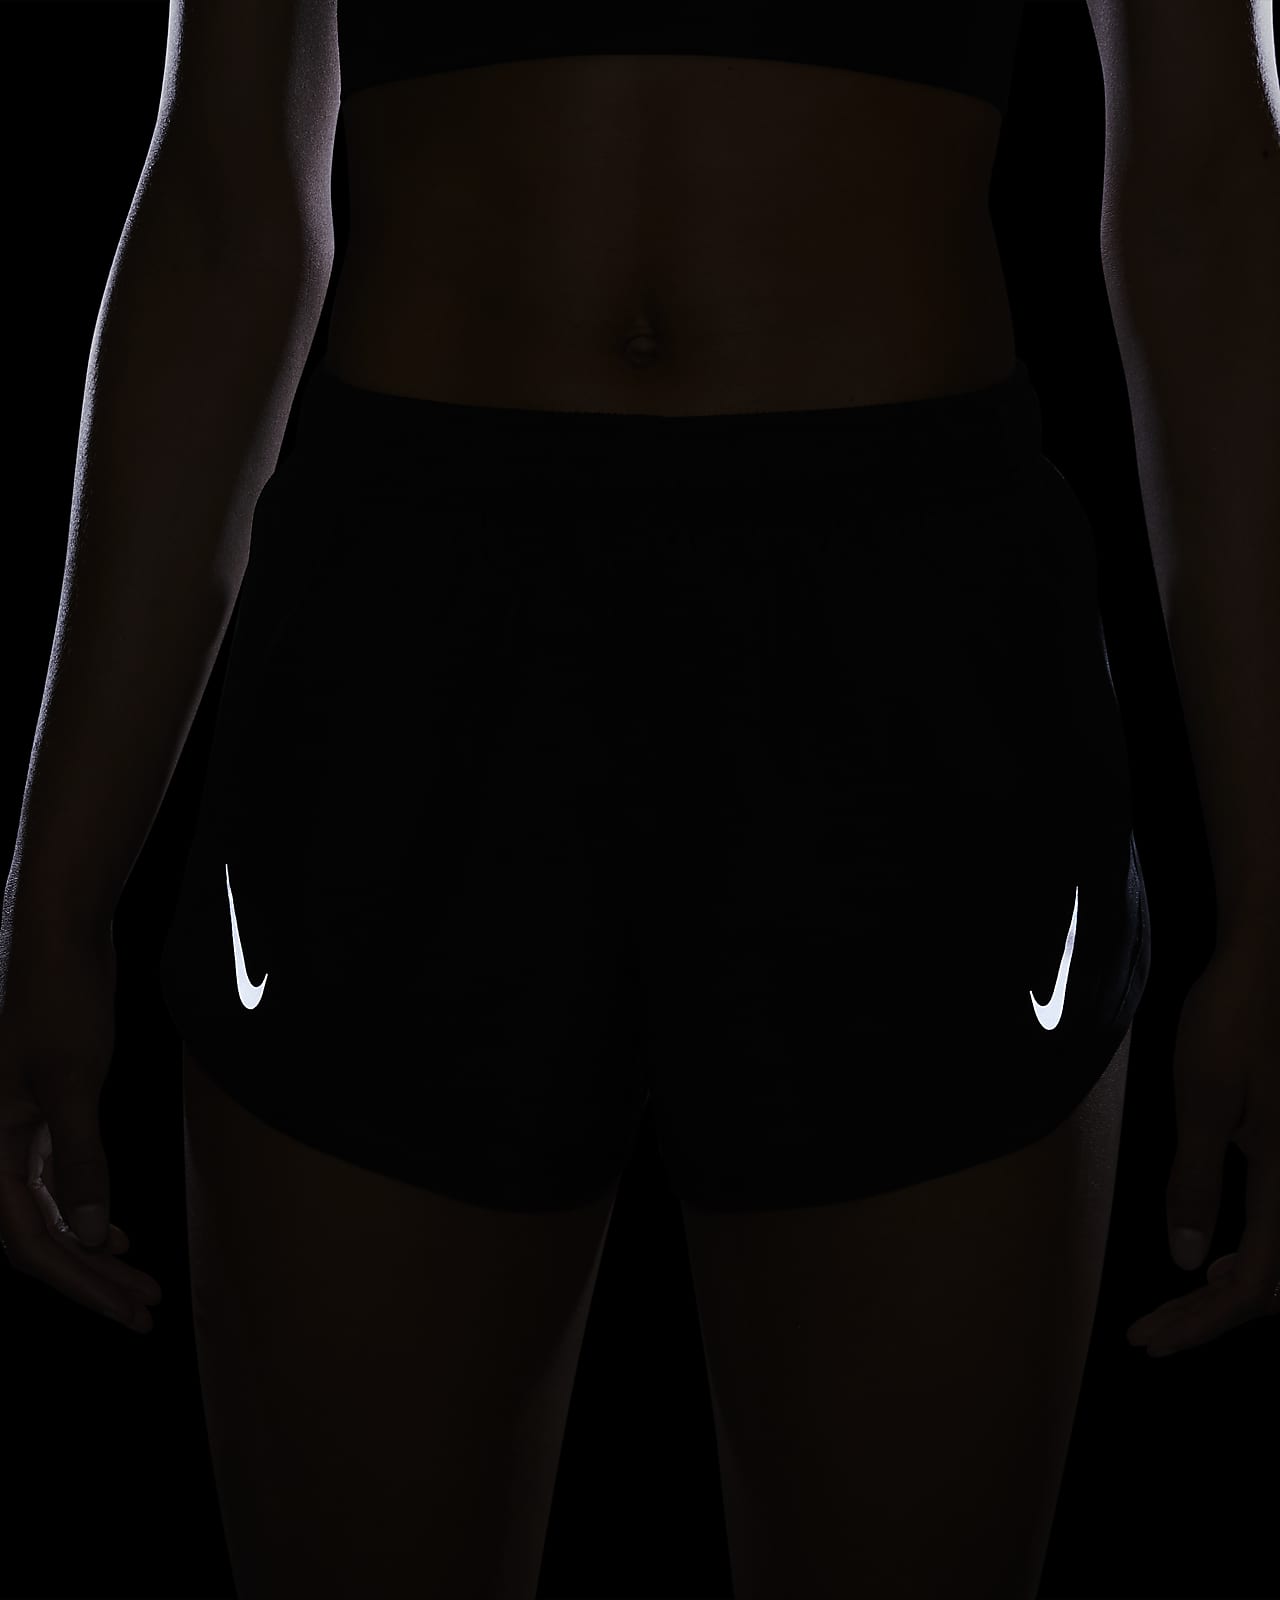 LULU DOOP! Nike dri fit running shorts in a size